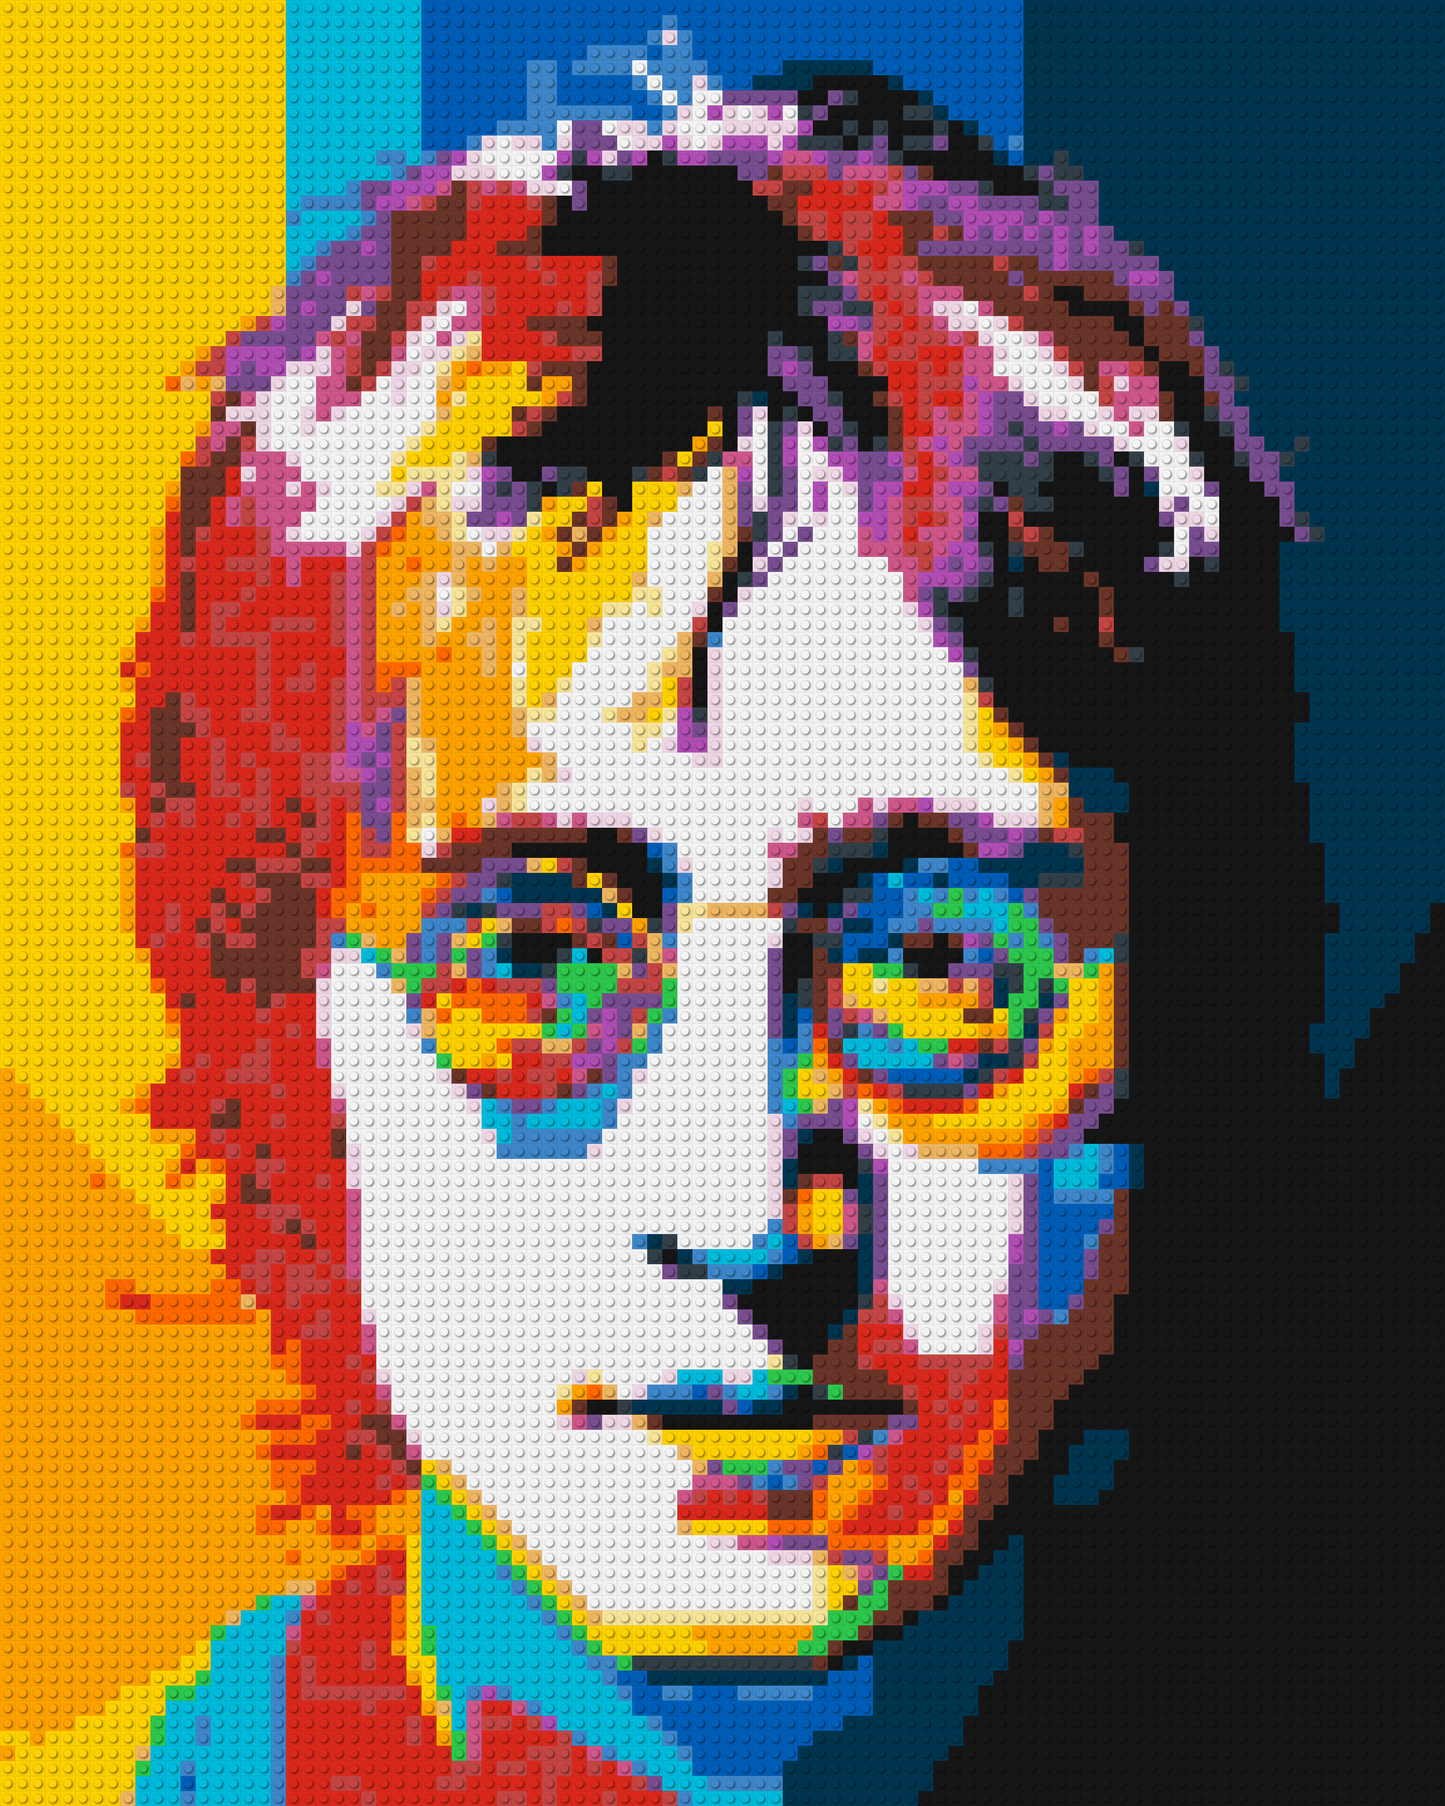 John Lennon - Brick Art Mosaic Kit